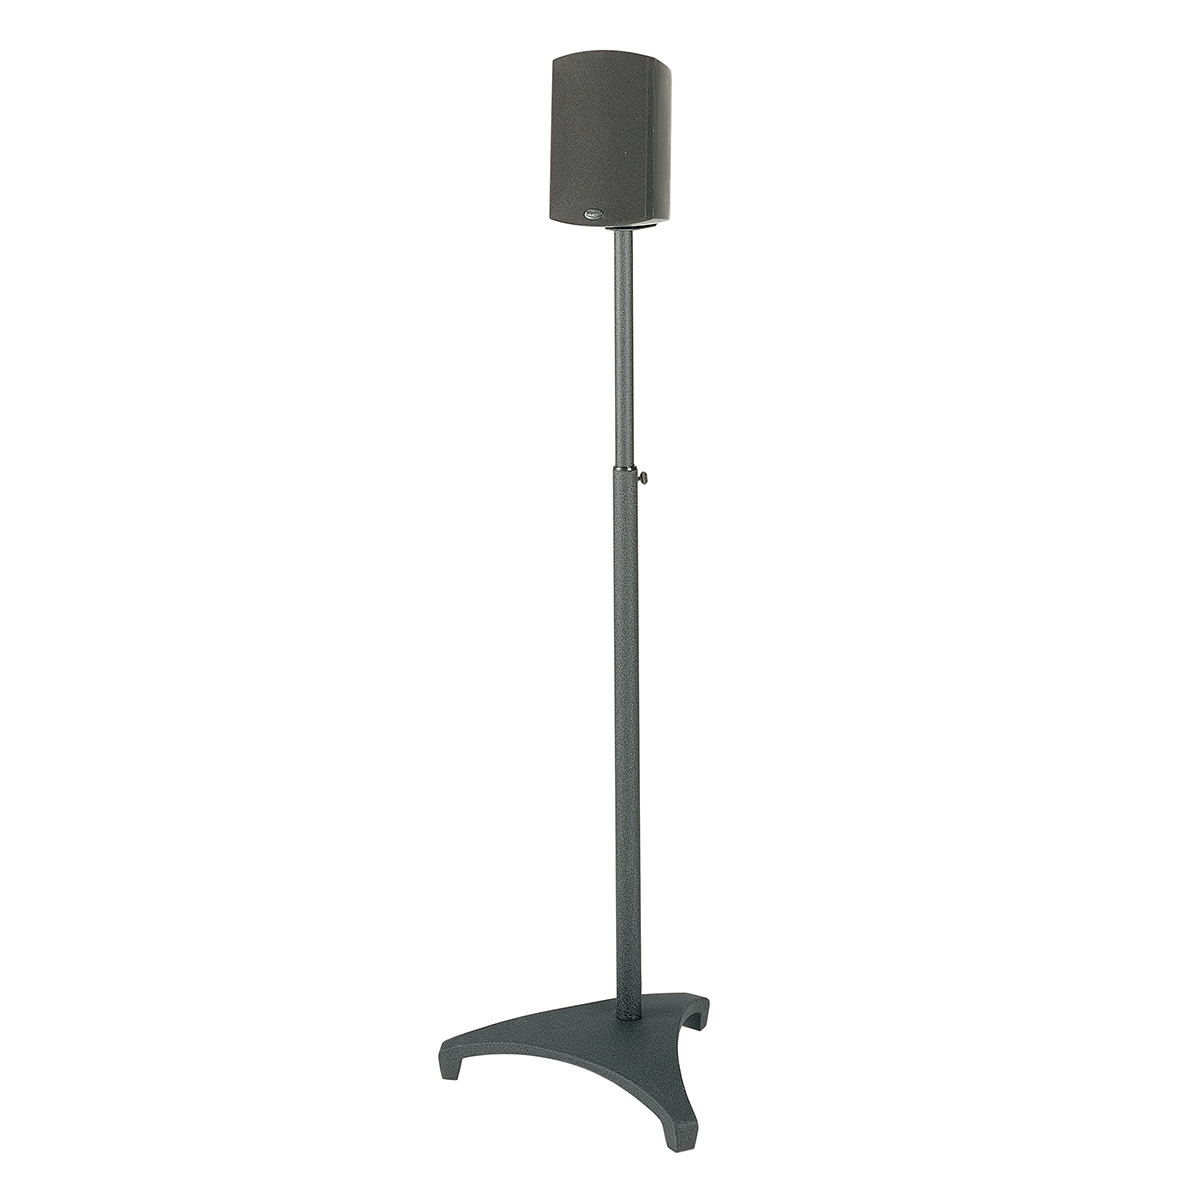 Sanus Euro Series Adjustable Speaker Stand for Satellite Speakers, Height Adjustable 26-42", Sold as Pair, Black - image 4 of 8